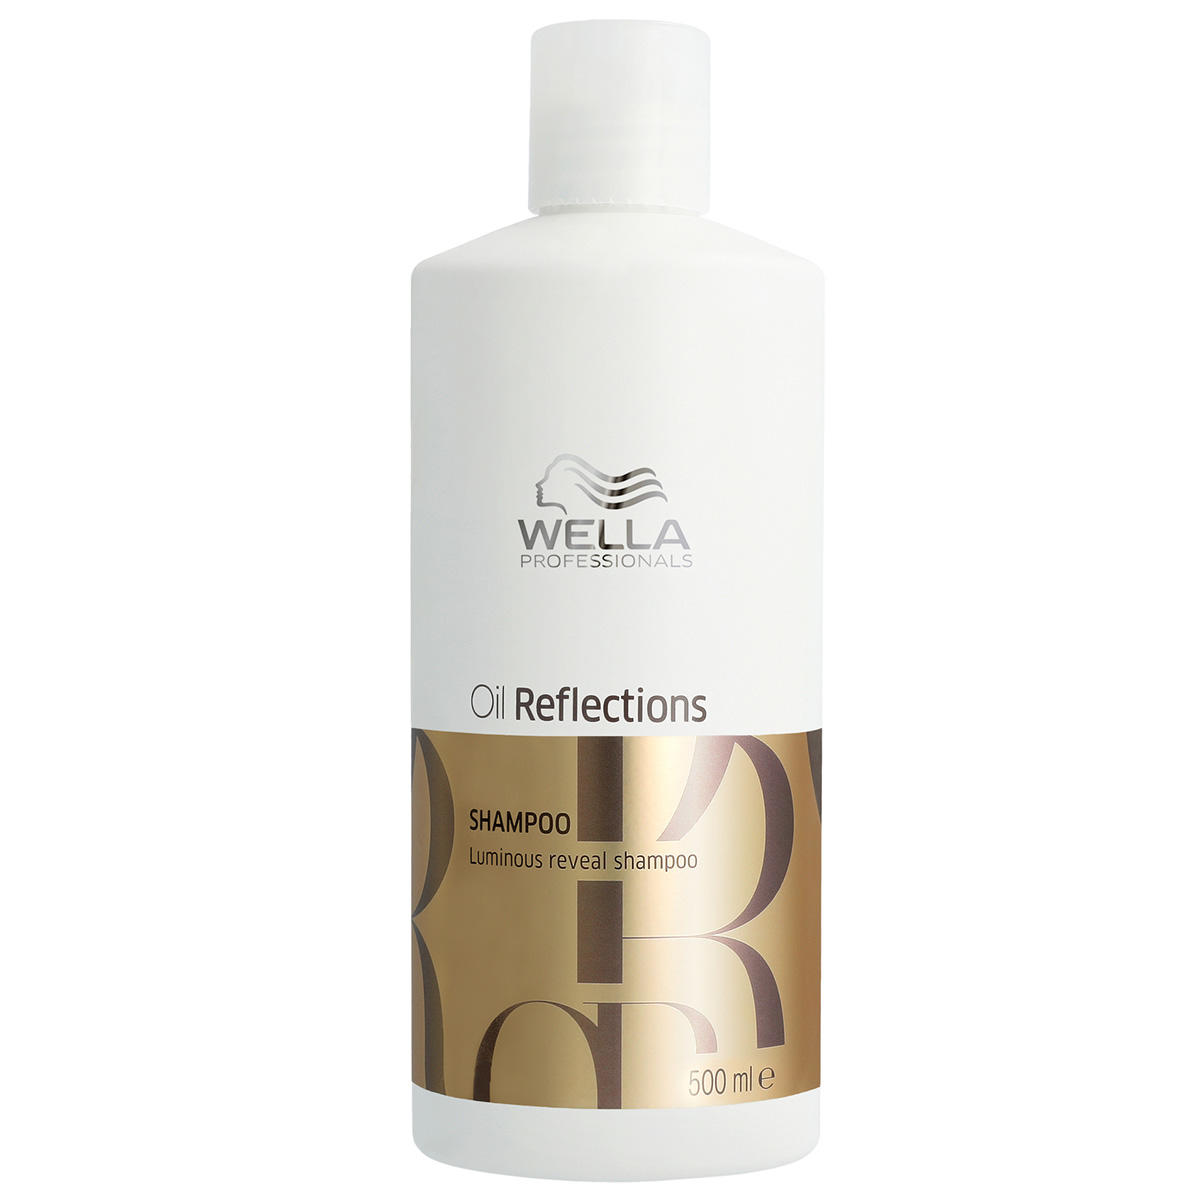 Wella Oil Reflections Shampoo 500 ml